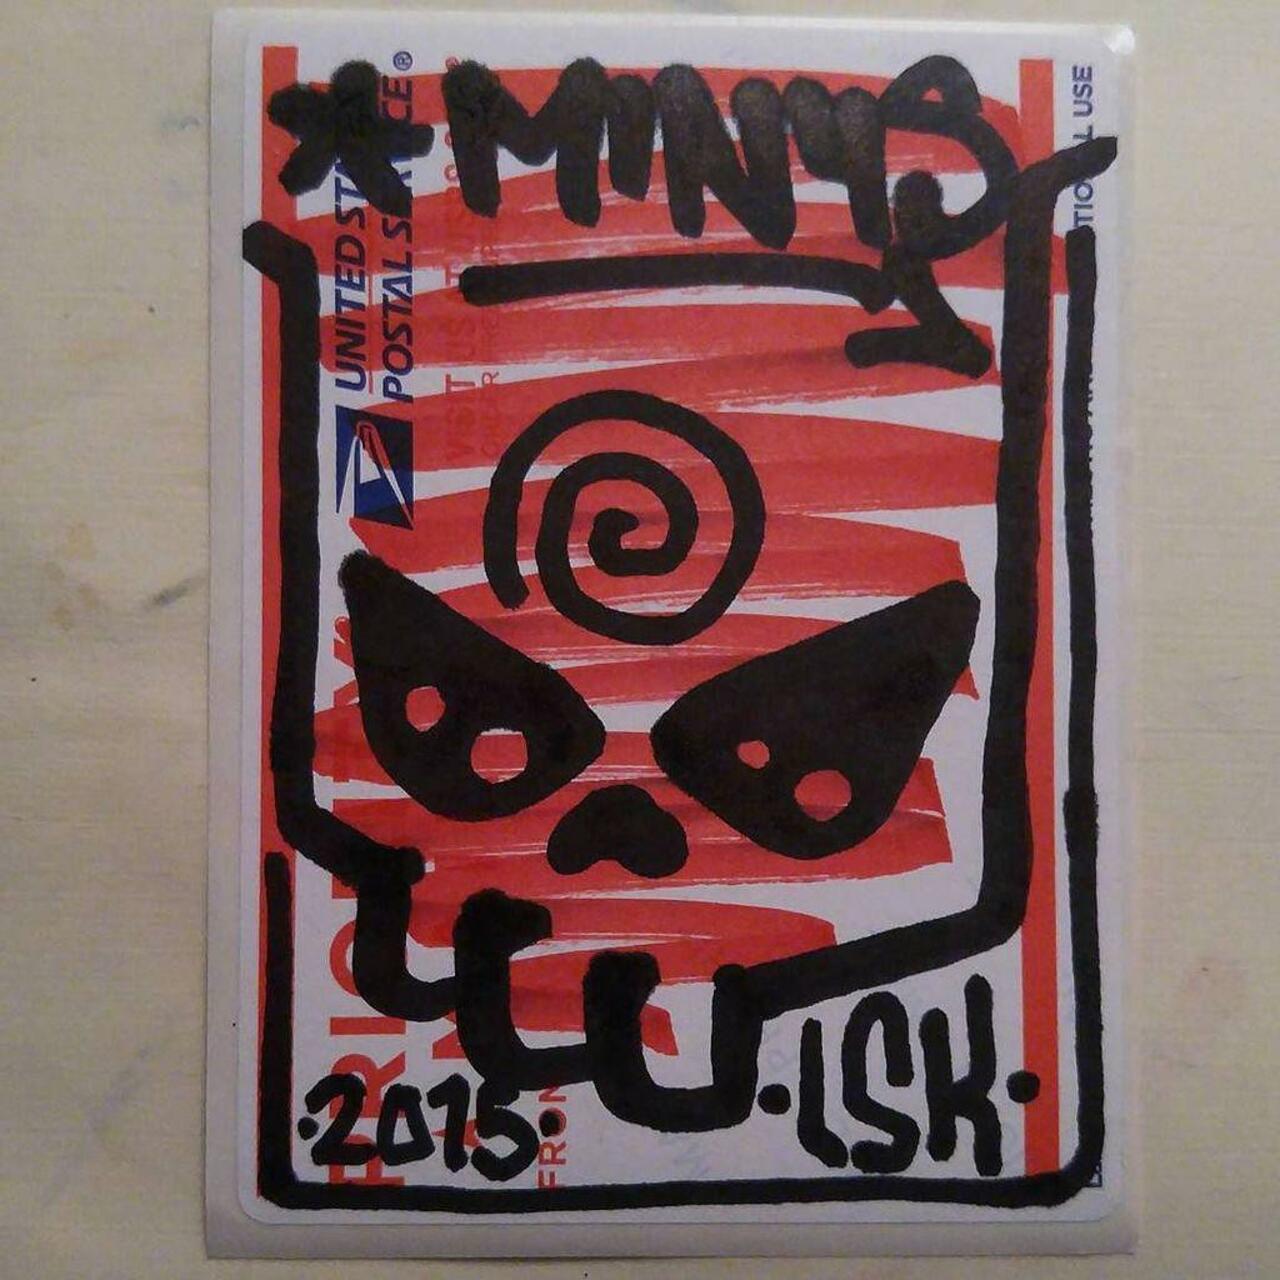 RT @artpushr: via #min.lsk "http://ift.tt/1jt8Zb4" #graffiti #streetart http://t.co/QG5qqfQnRh